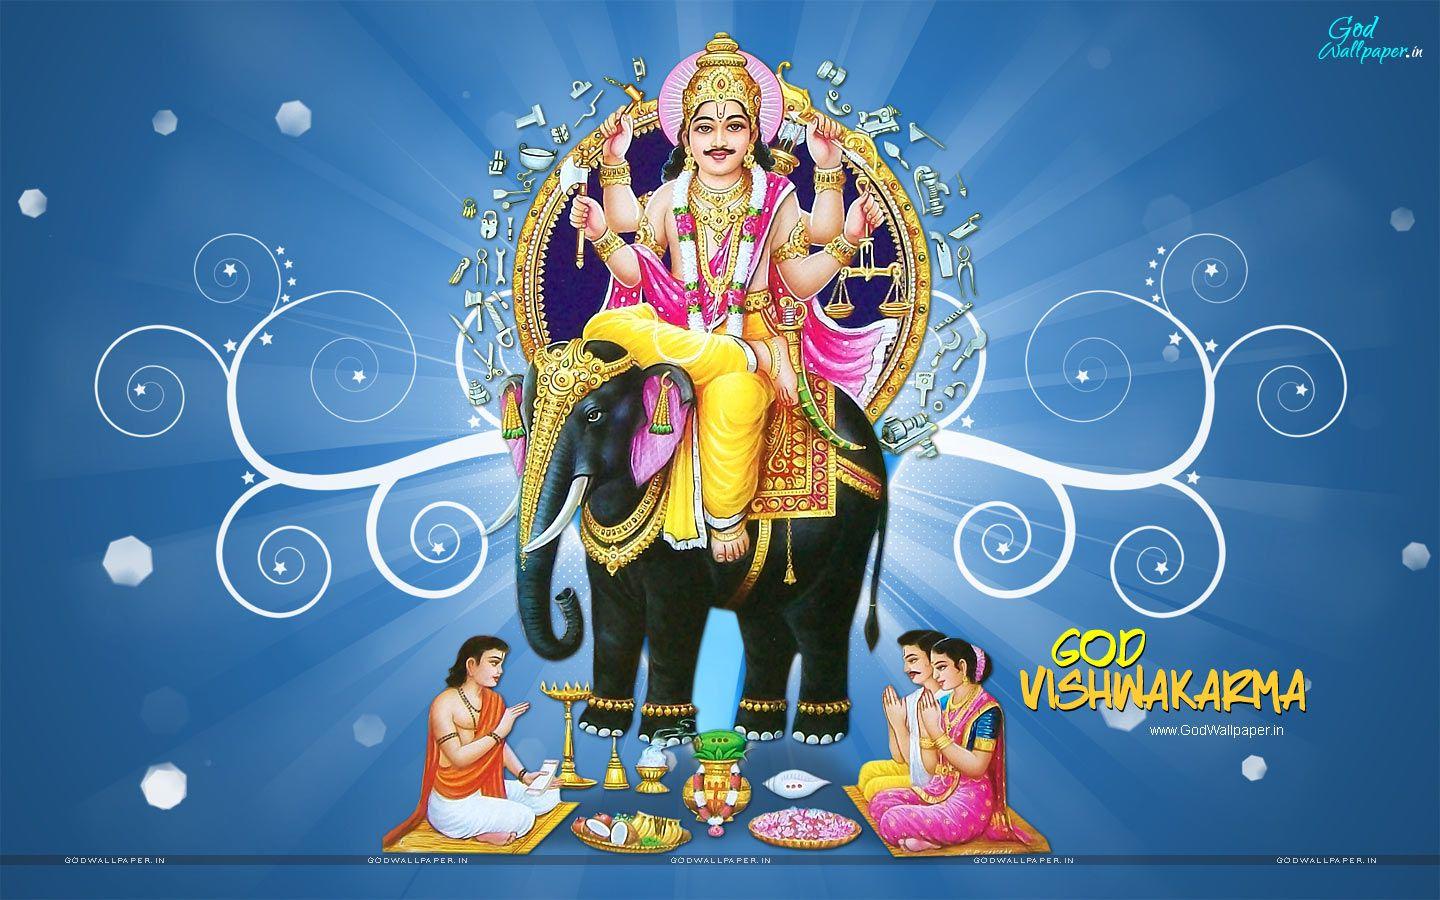 God Vishwakarma Wallpaper HD Wallpaper